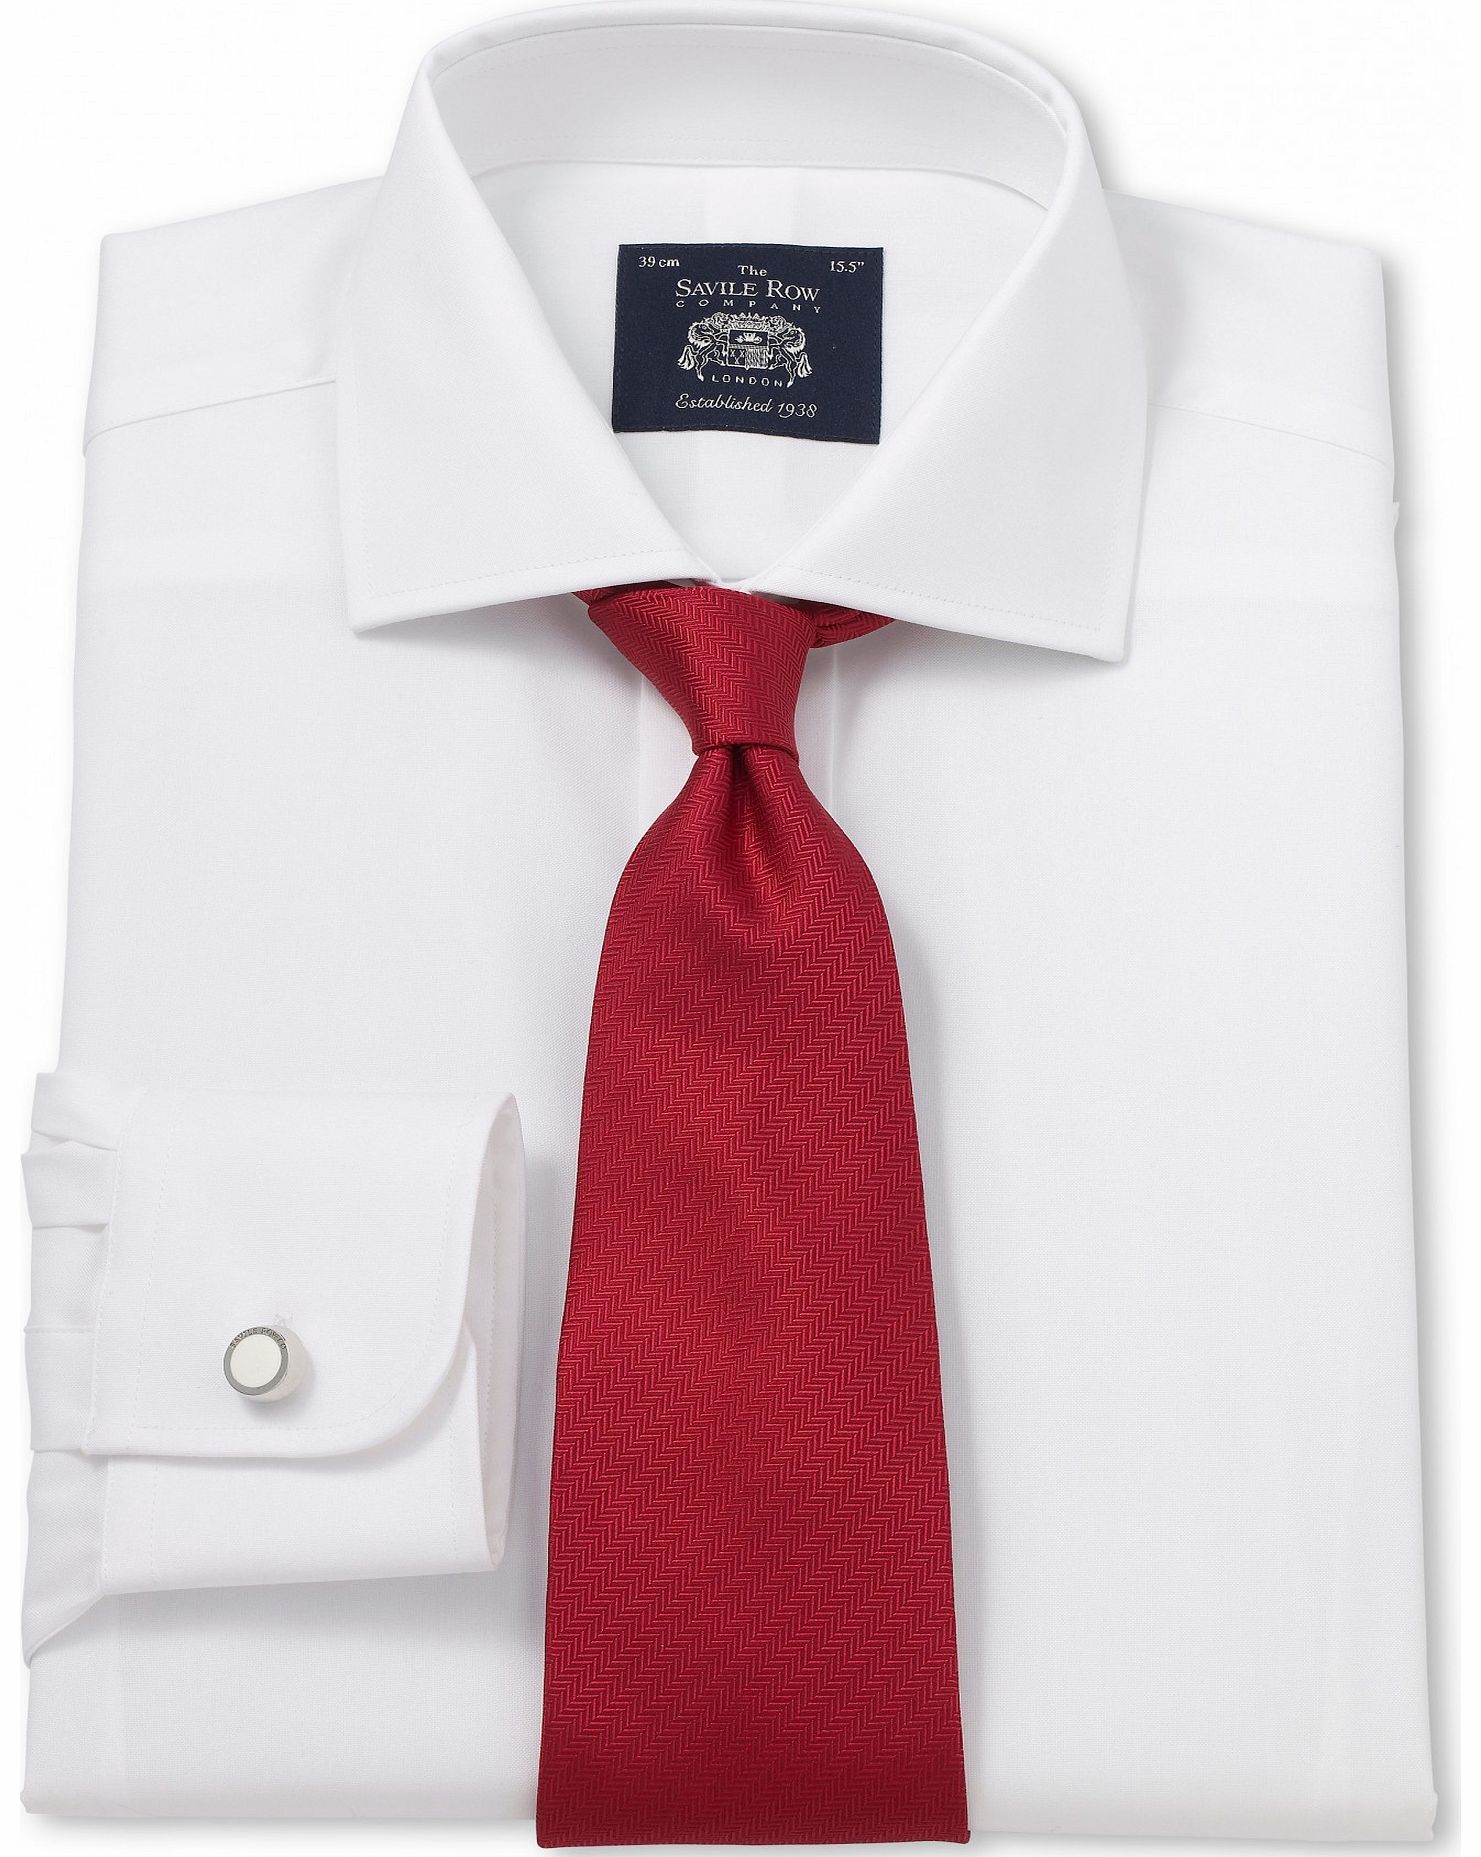 Savile Row Company White Poplin Non Iron Slim Fit Shirt 15 1/2``